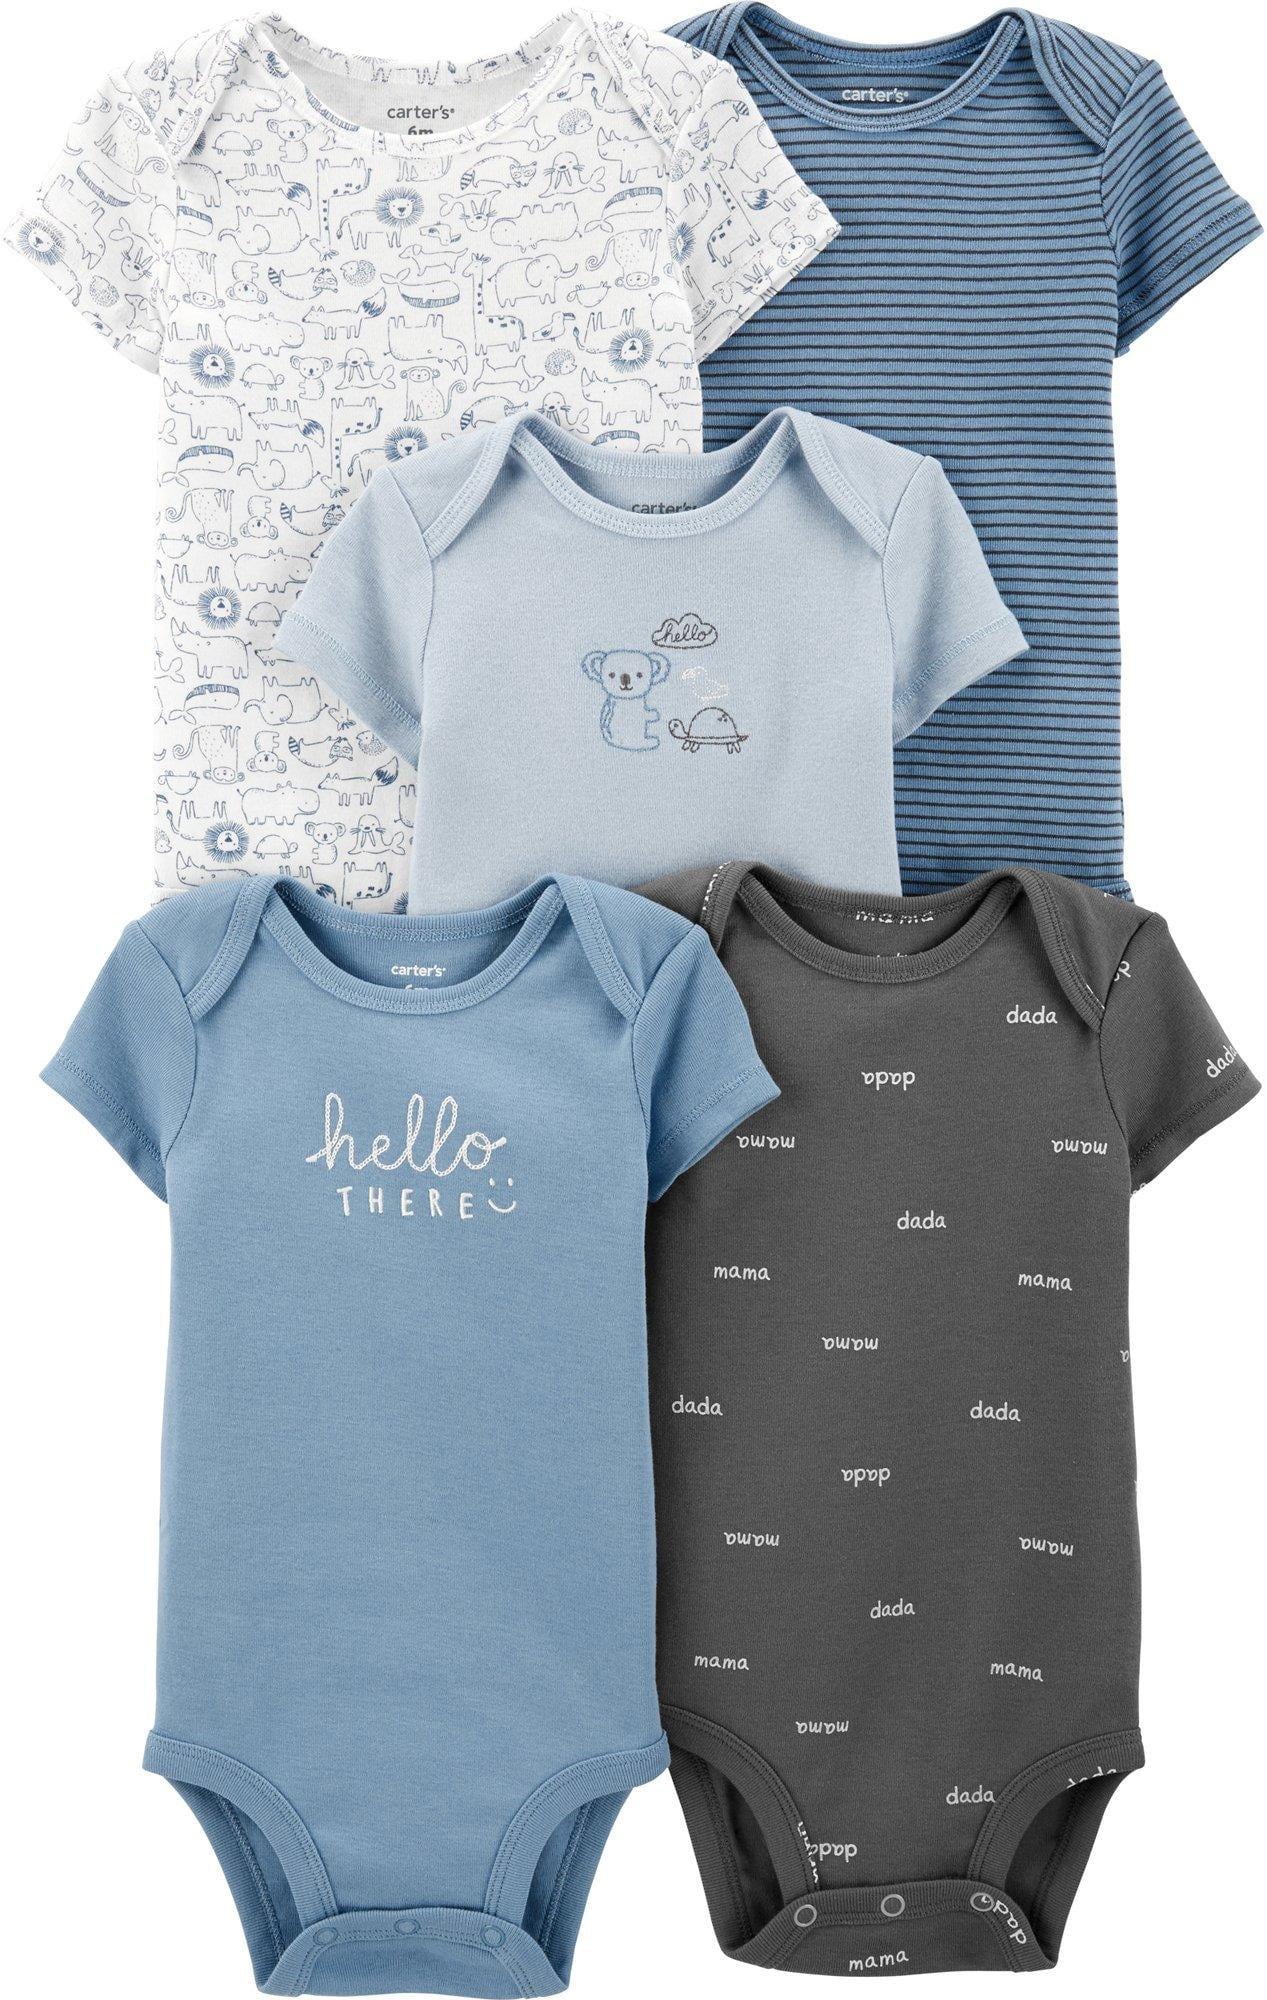 Carter's Baby Clothing Items - Walmart.com